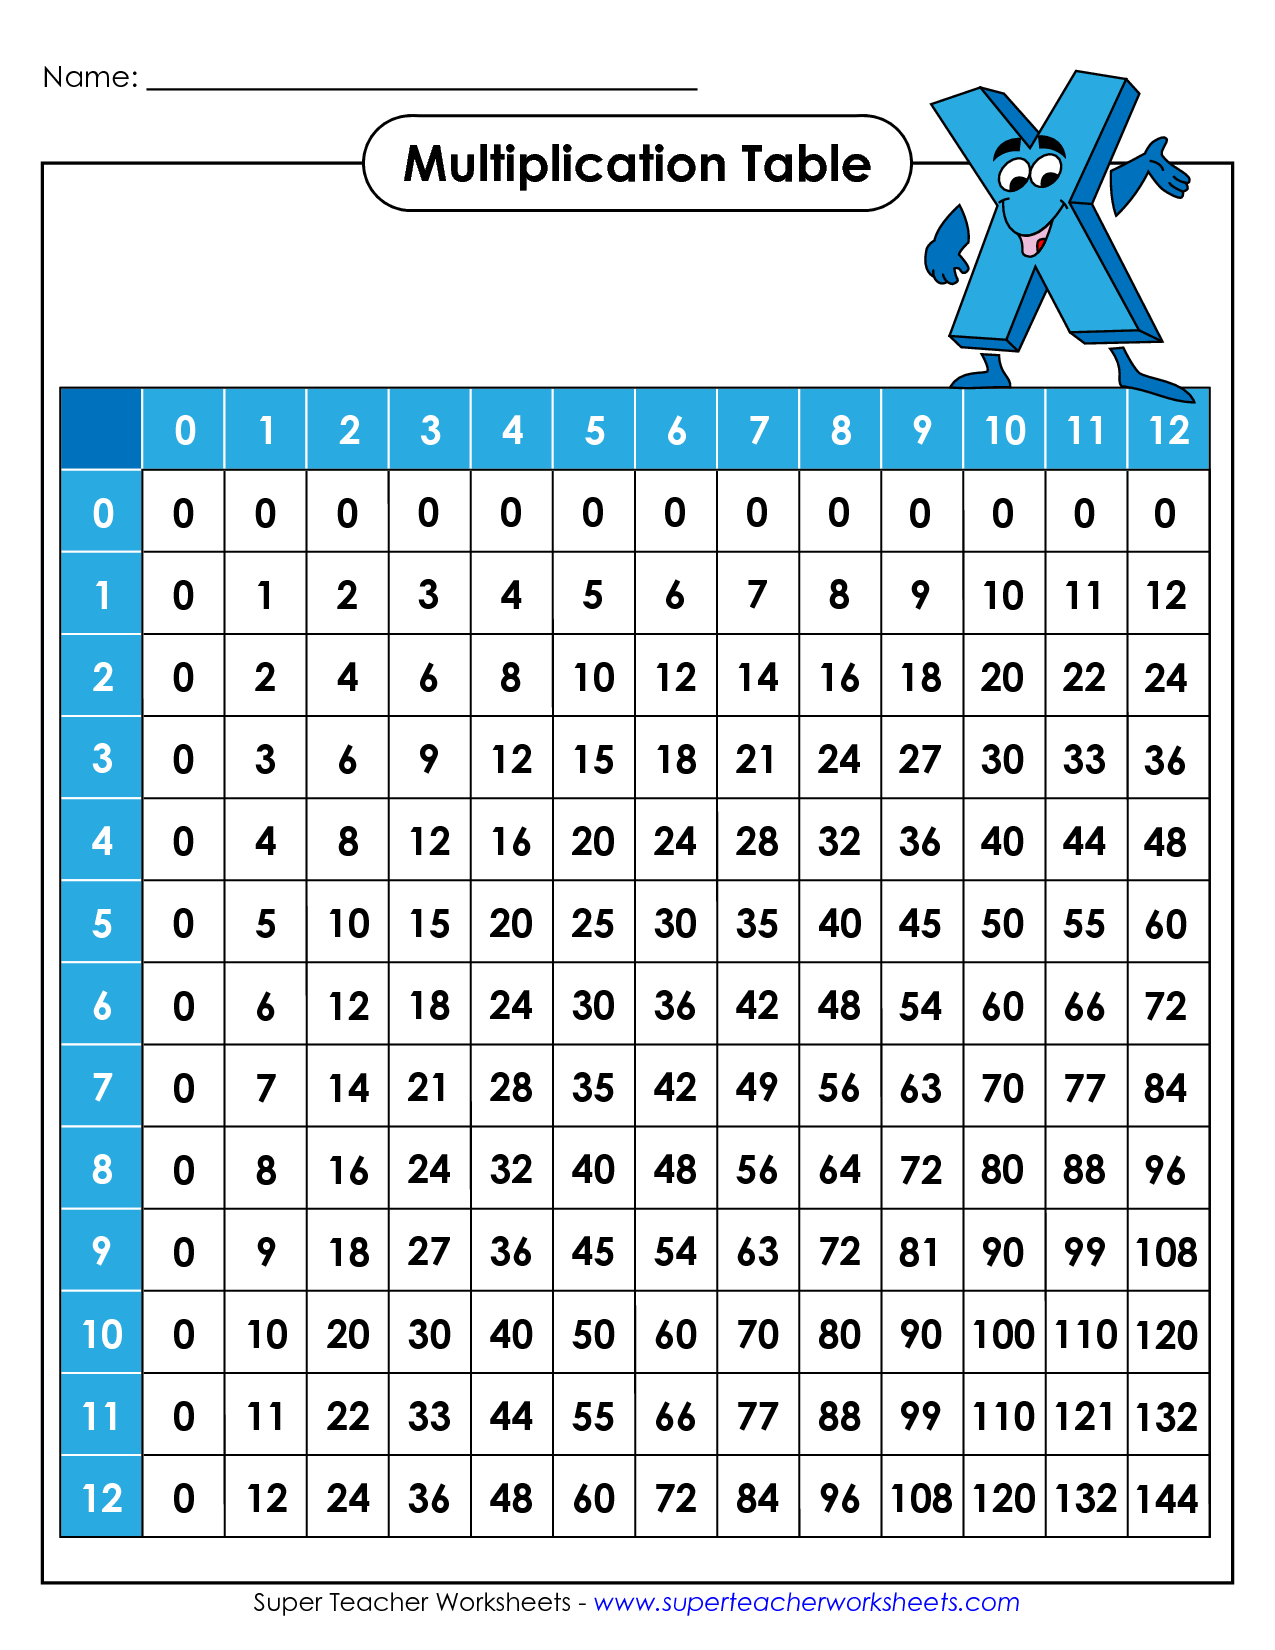 Multiplication Facts Worksheet 1 12